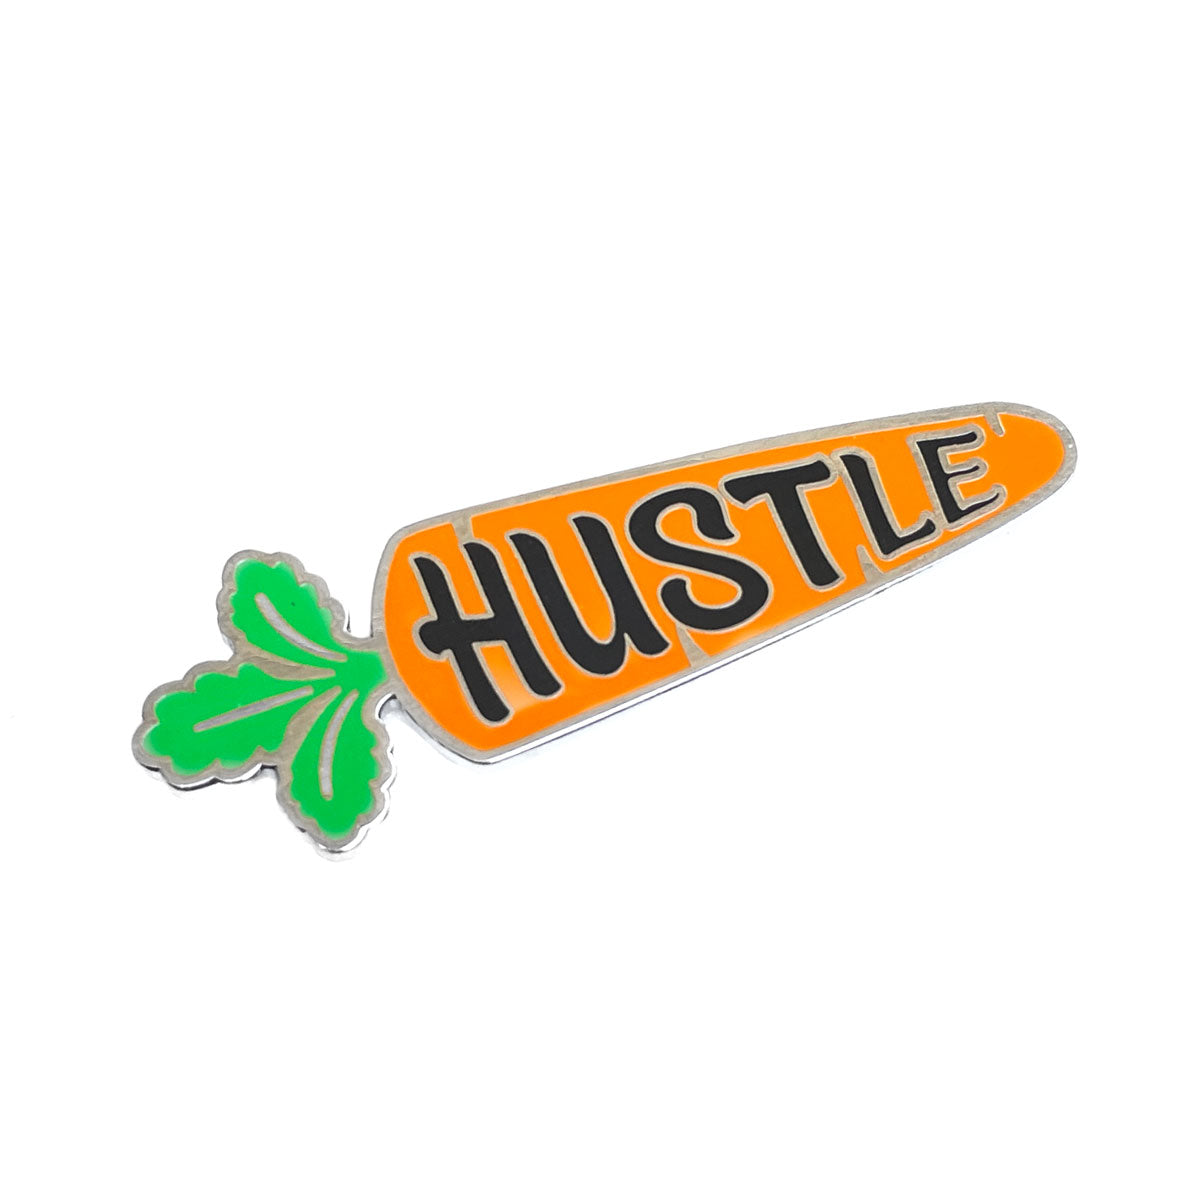 Pin on Hustle